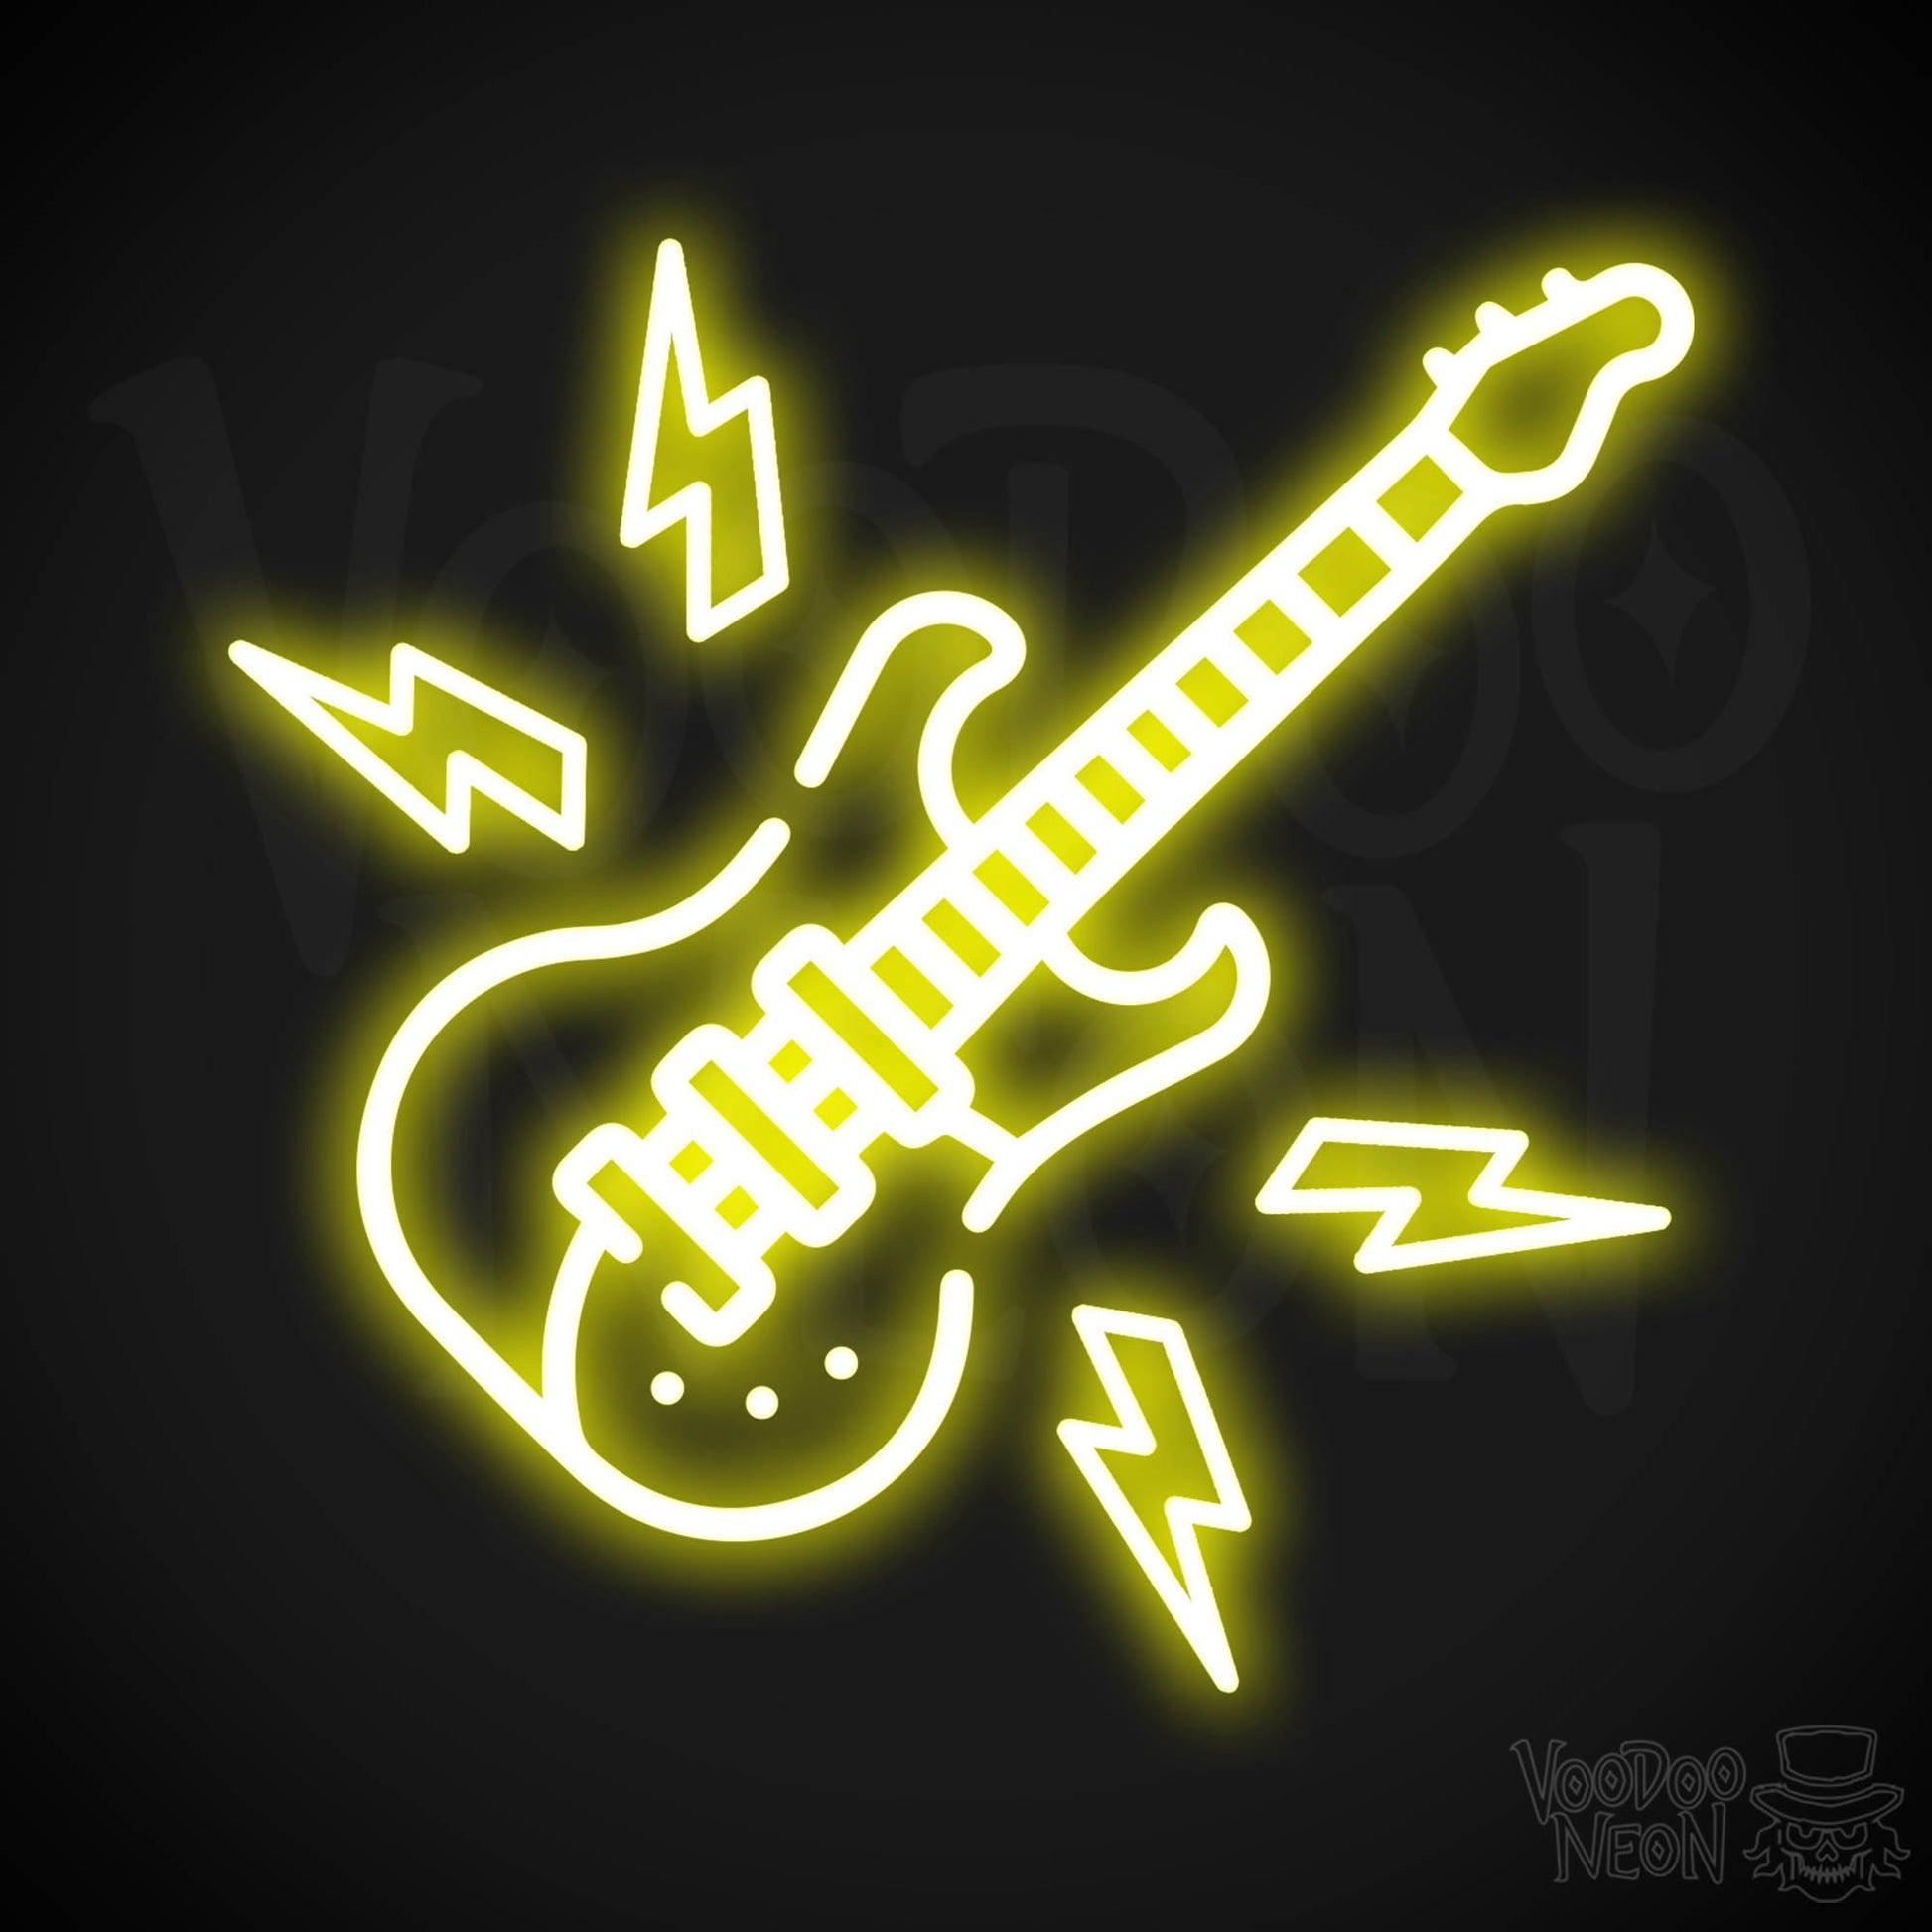 Neon Electric Guitar Sign - Electric Guitar Neon Sign - Electric Guitar Neon Wall Art - Color Yellow